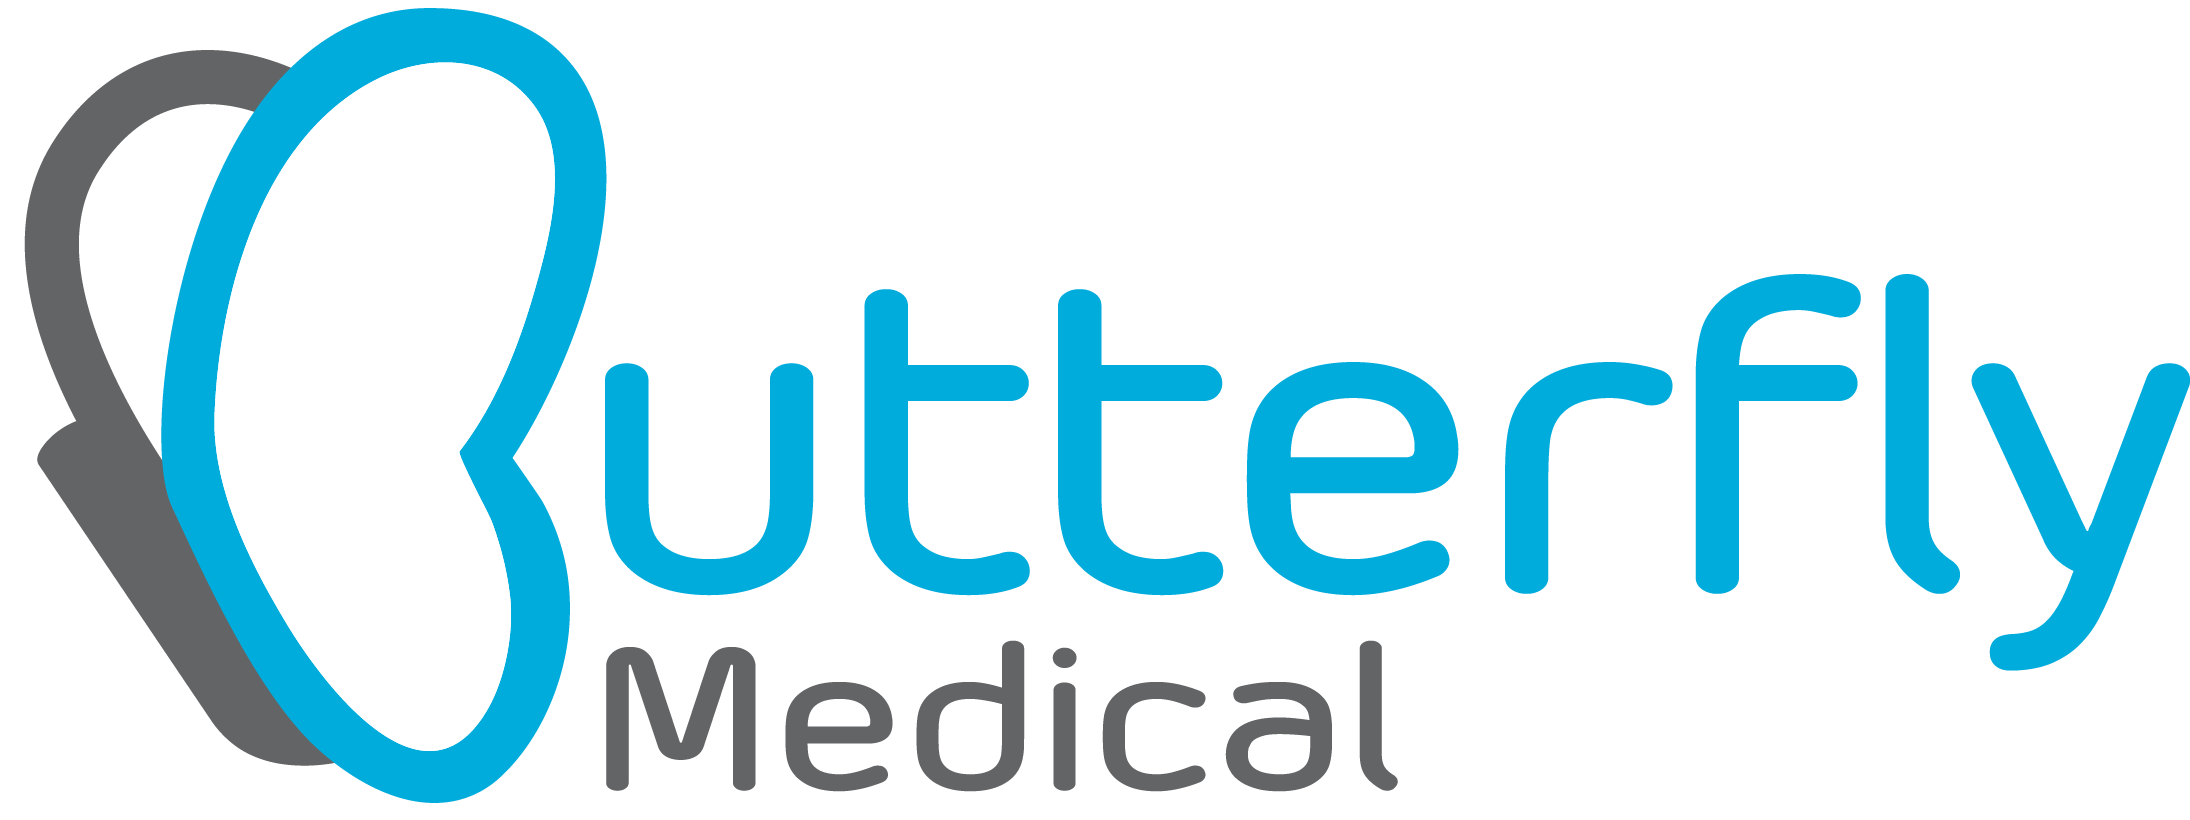 Butterfly Medical Company Logo